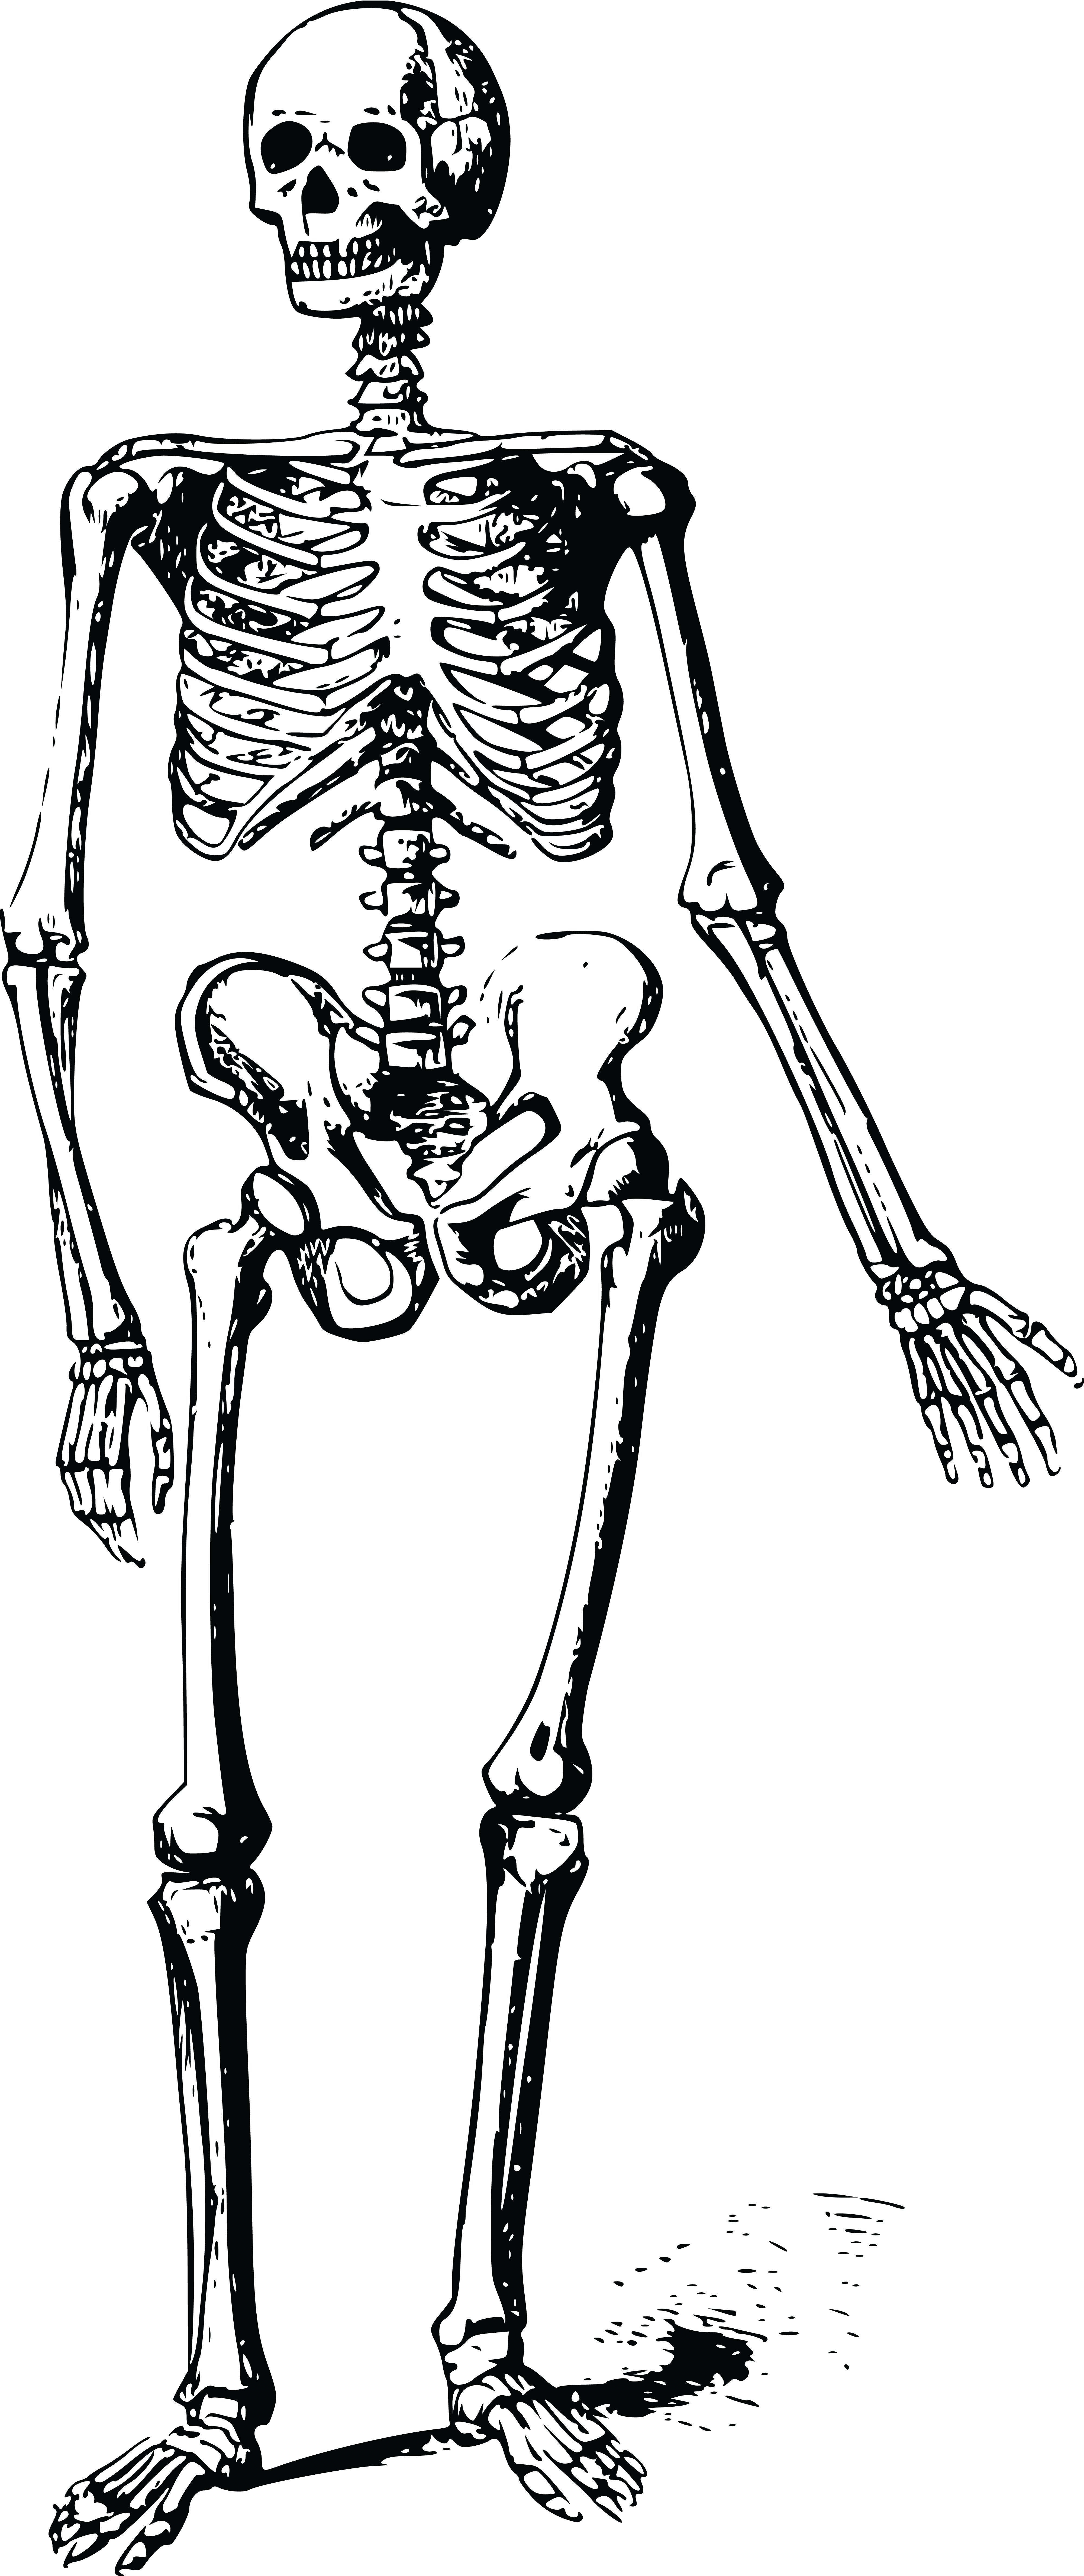 Skeleton Anterior Clip Art At Clker Com Vector Clip Art Online My XXX